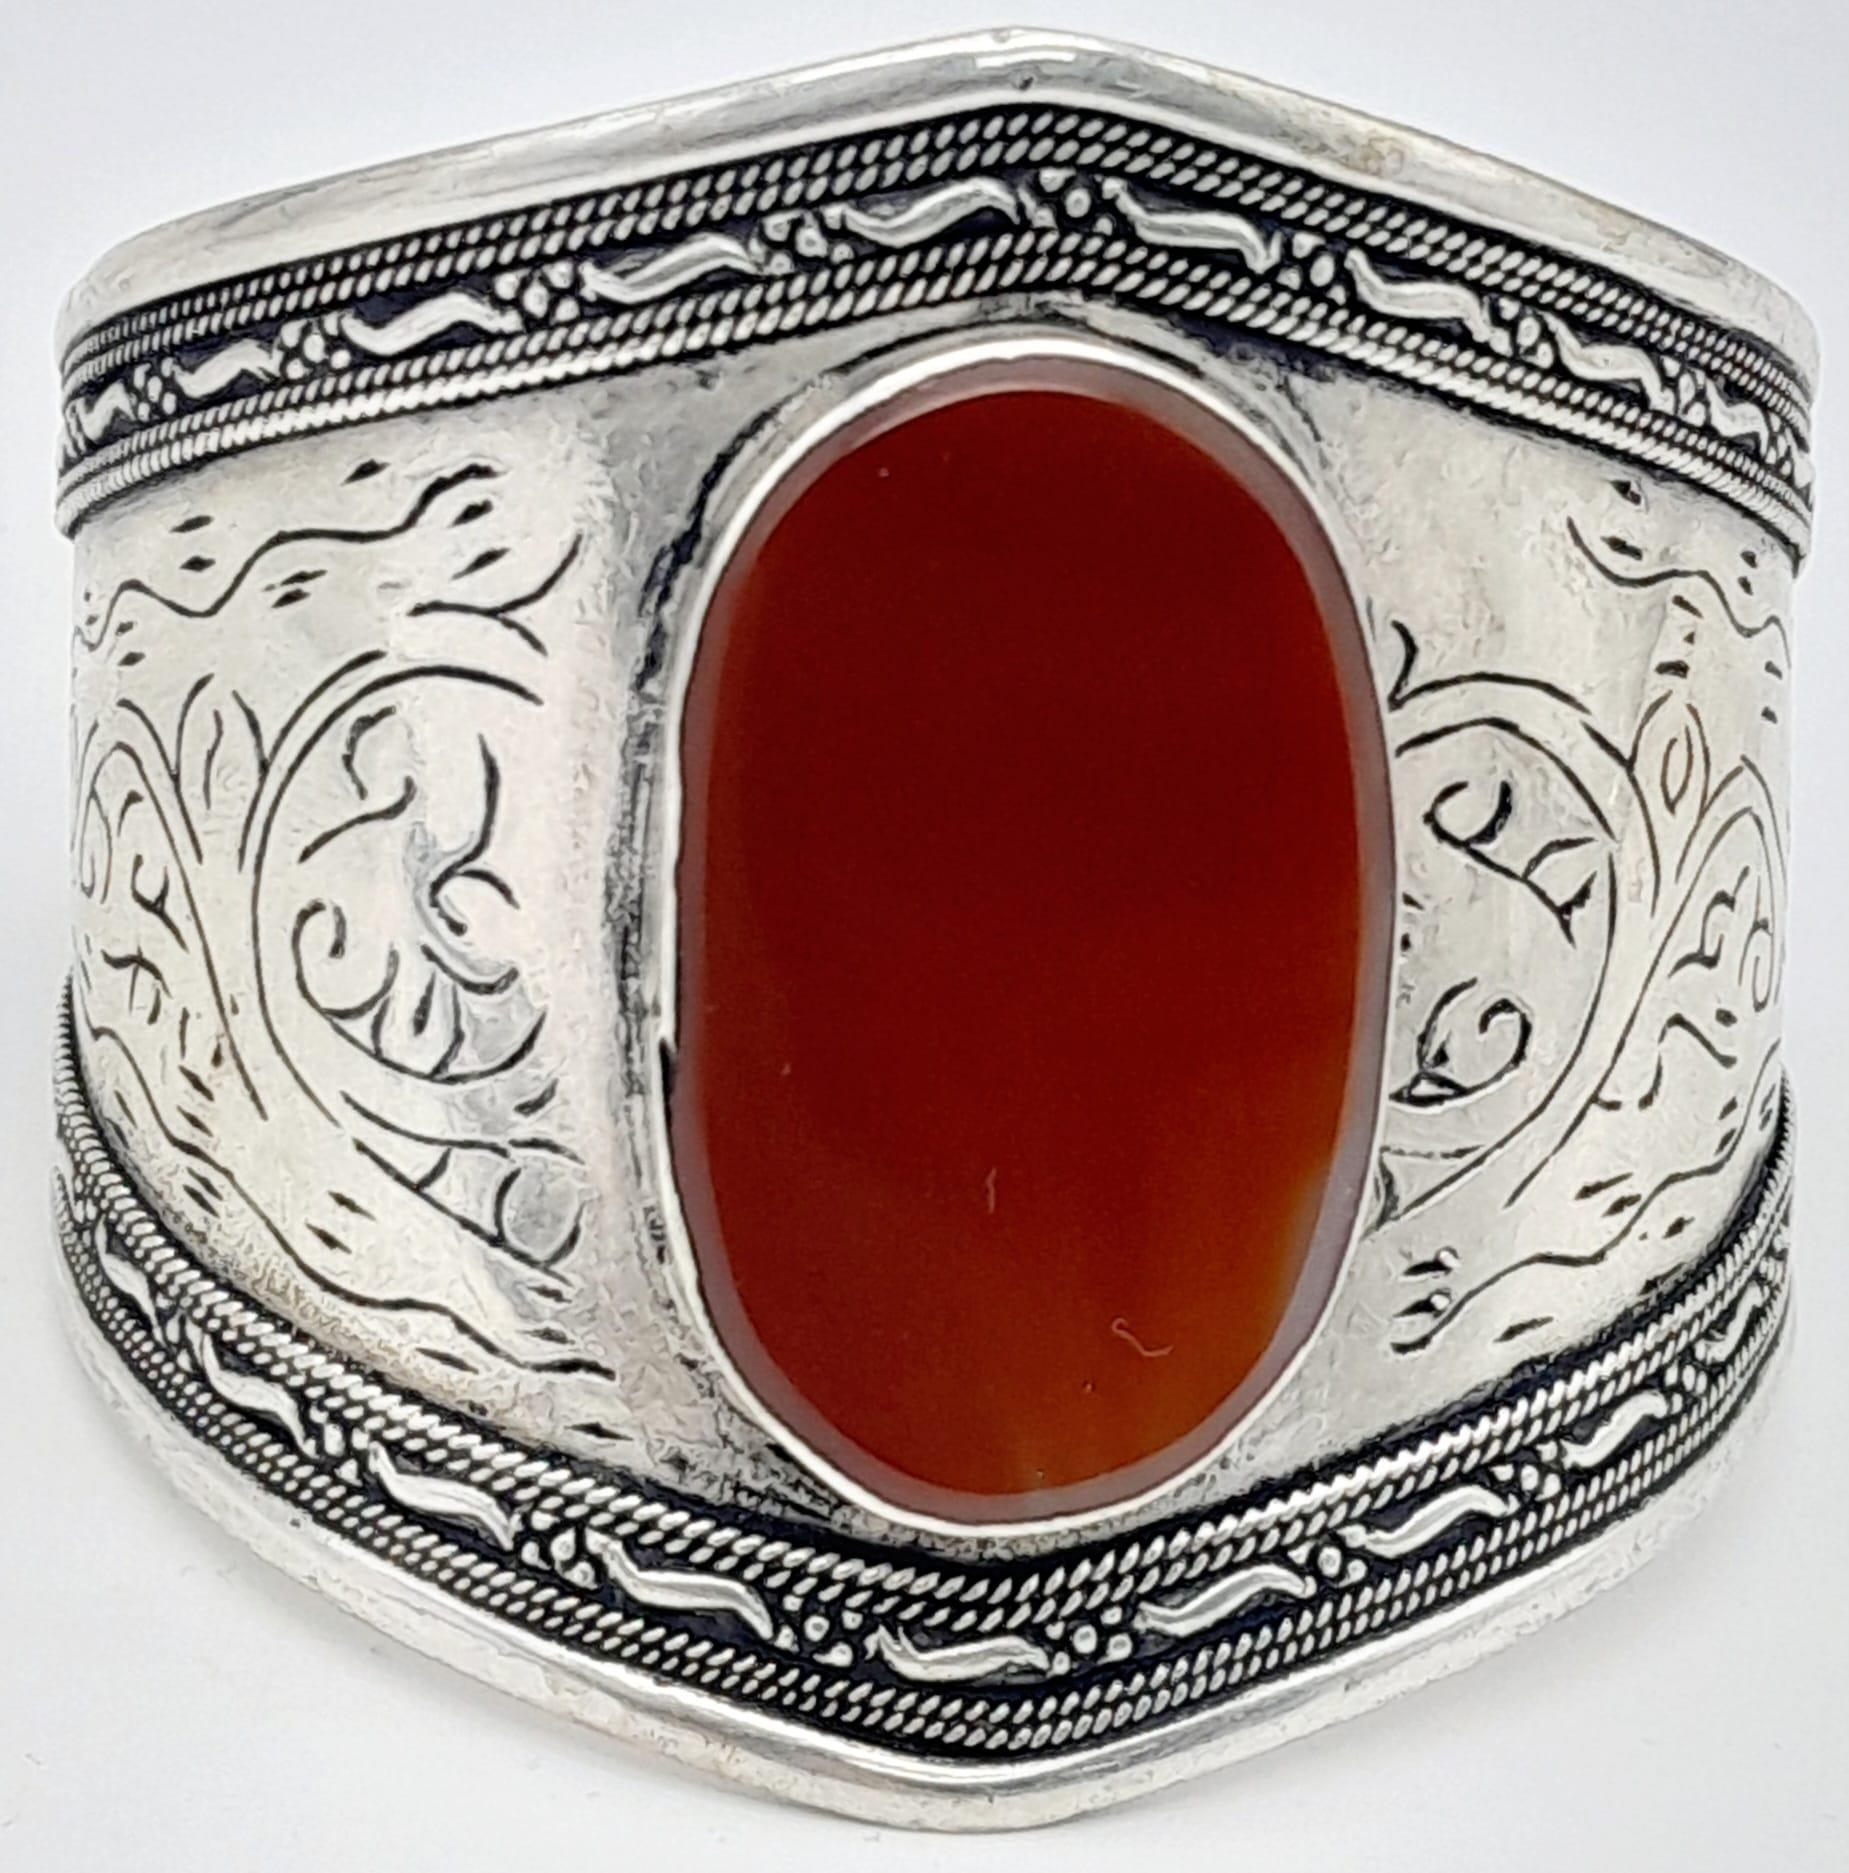 A Wonderful Trio of: Carnelian cuff bracelet, 800 German silver earrings and Berber amber resin - Image 2 of 6